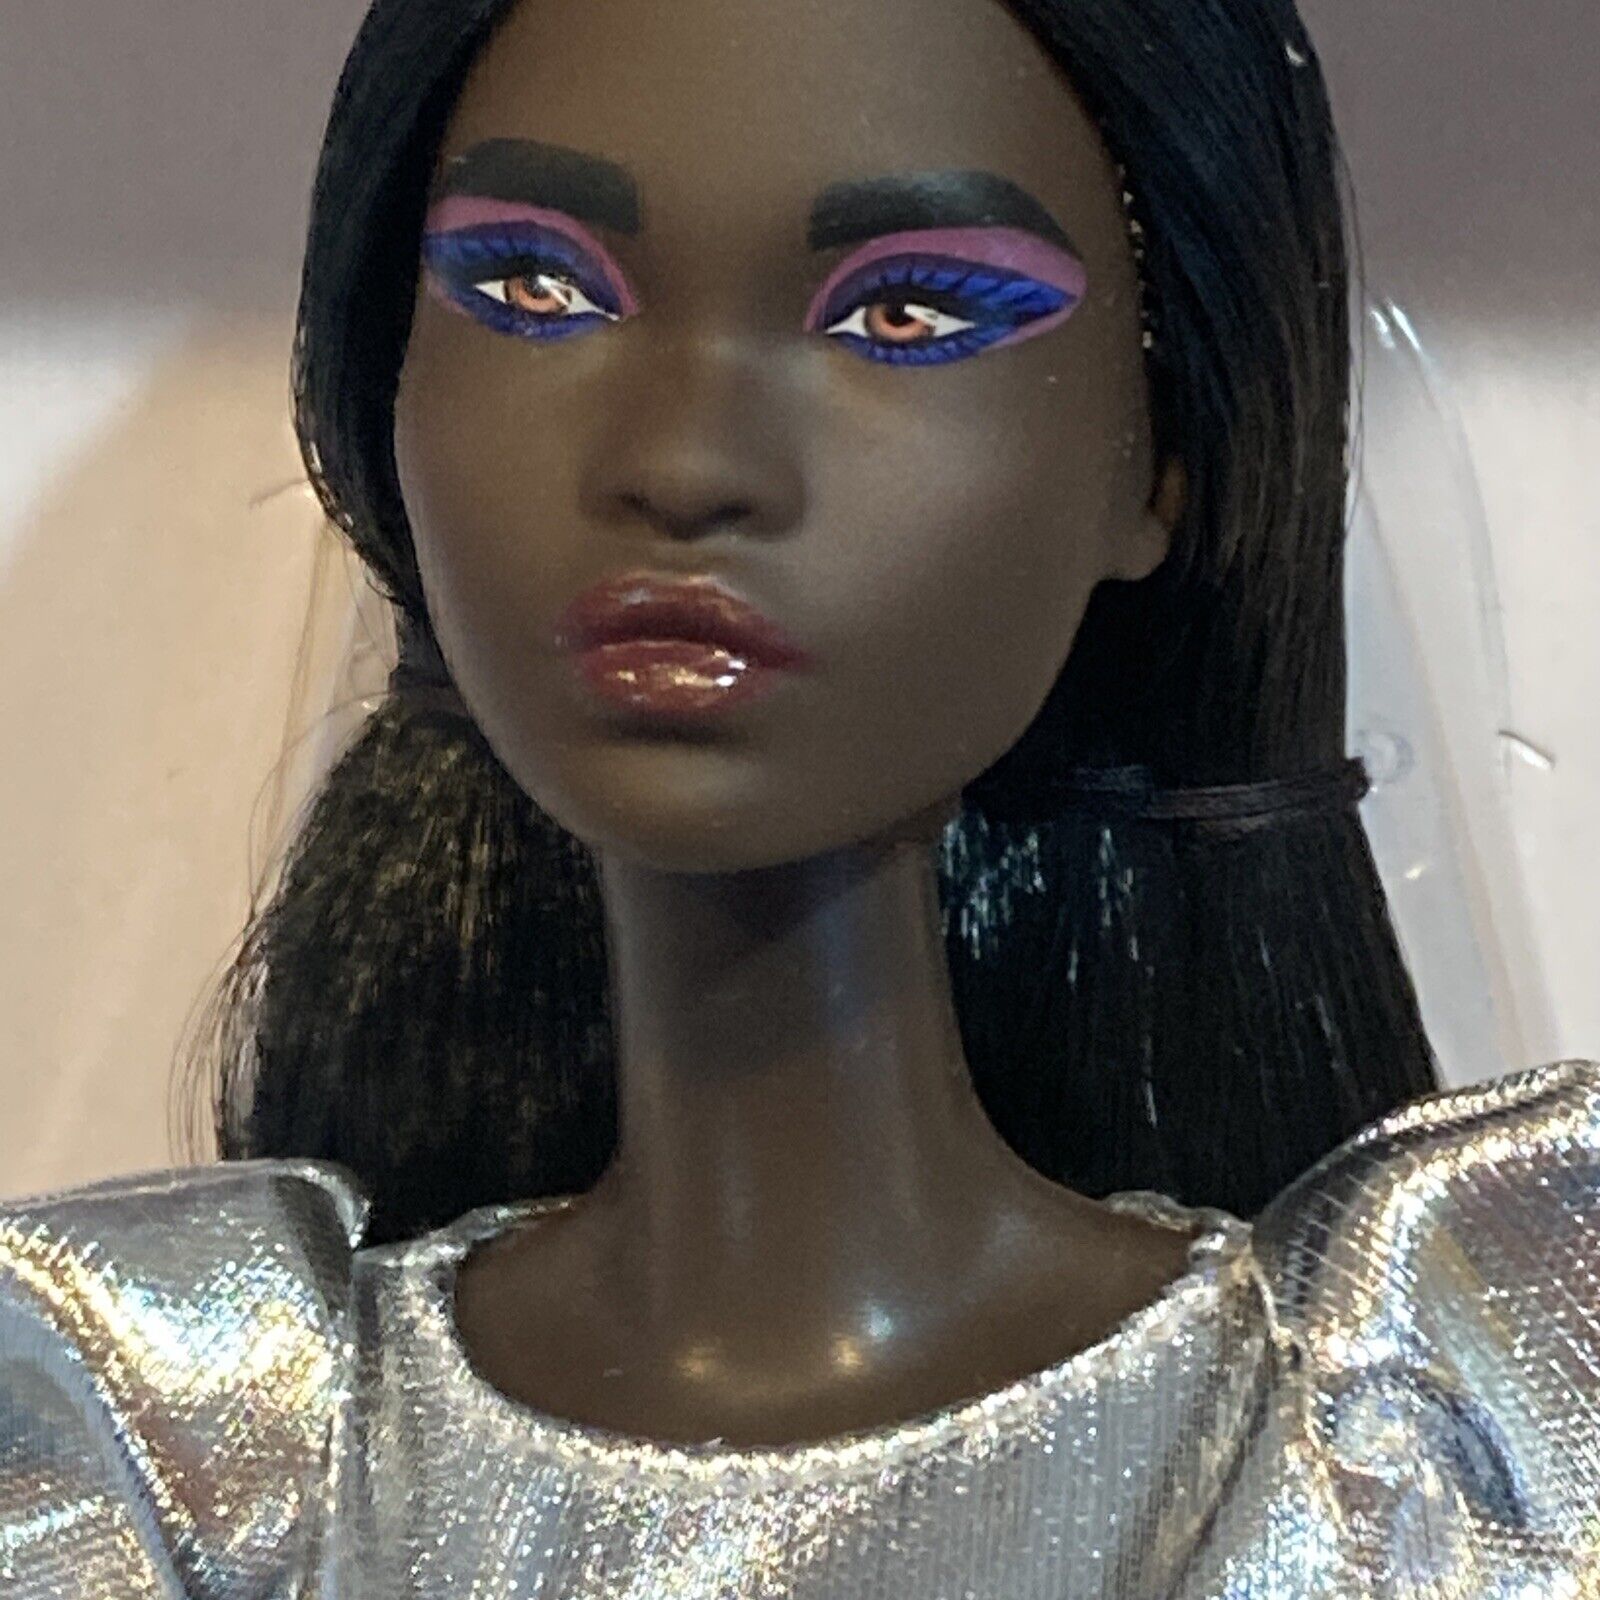 Tåget Fritid sum Barbie Signature Looks Model # 10 AA Black Doll Long Hair - In Stock-Ships  Now! | eBay